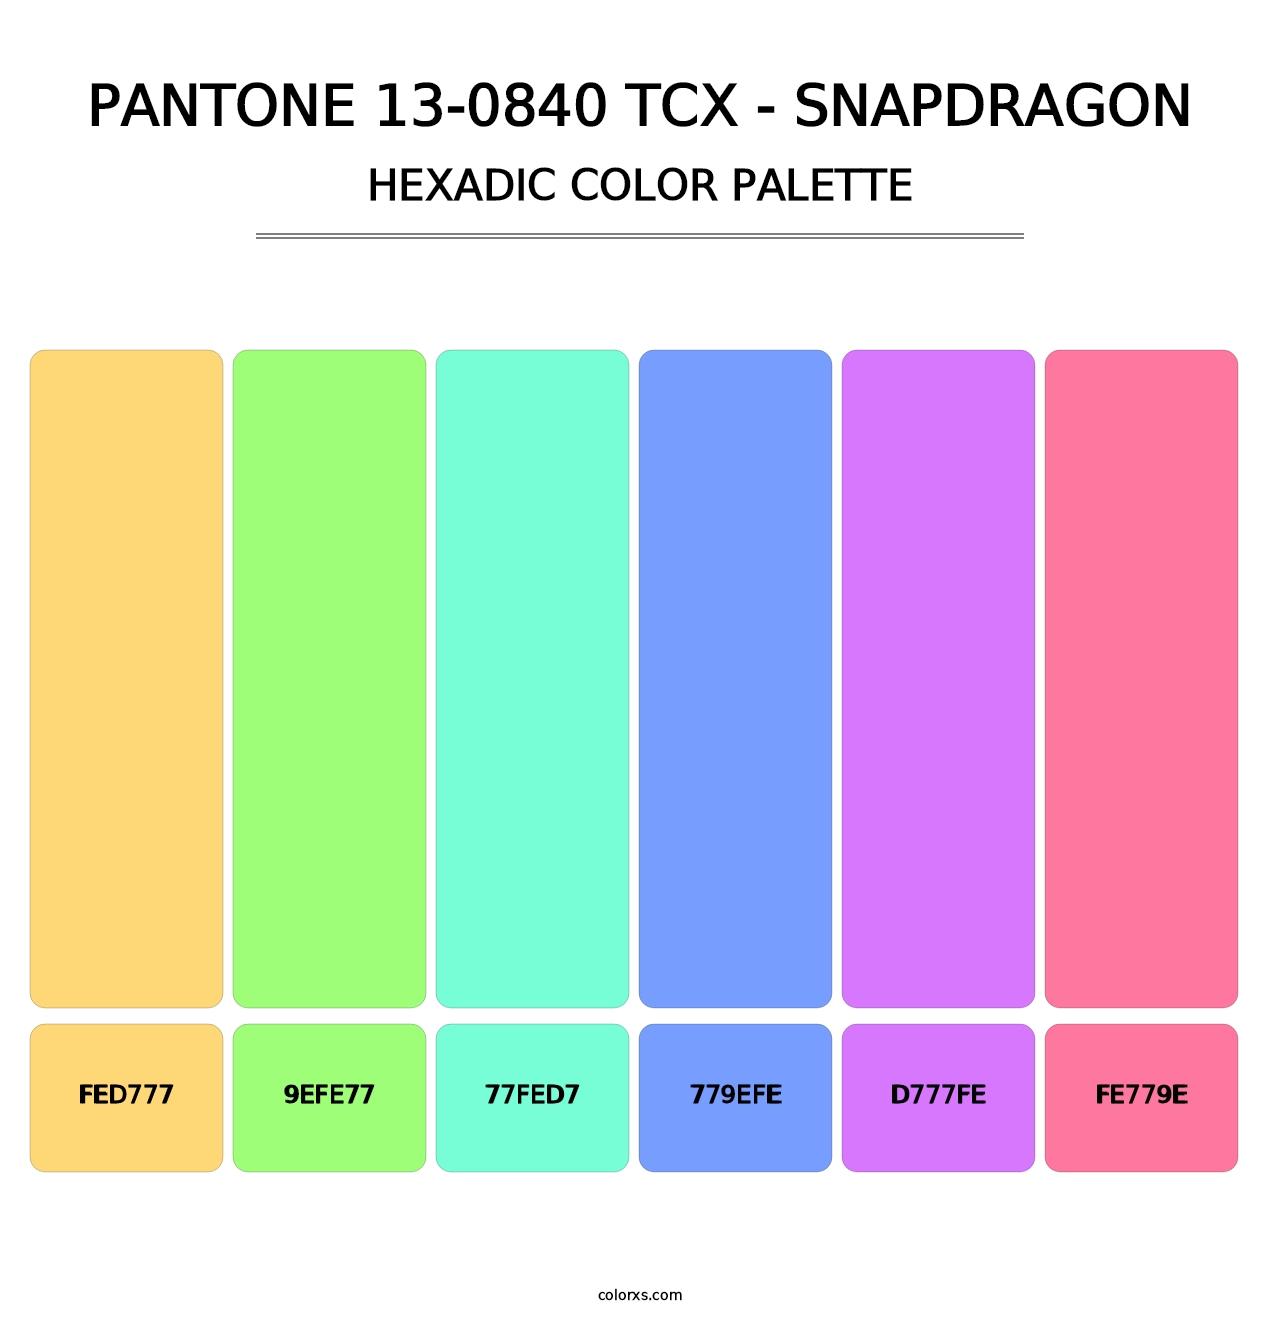 PANTONE 13-0840 TCX - Snapdragon - Hexadic Color Palette